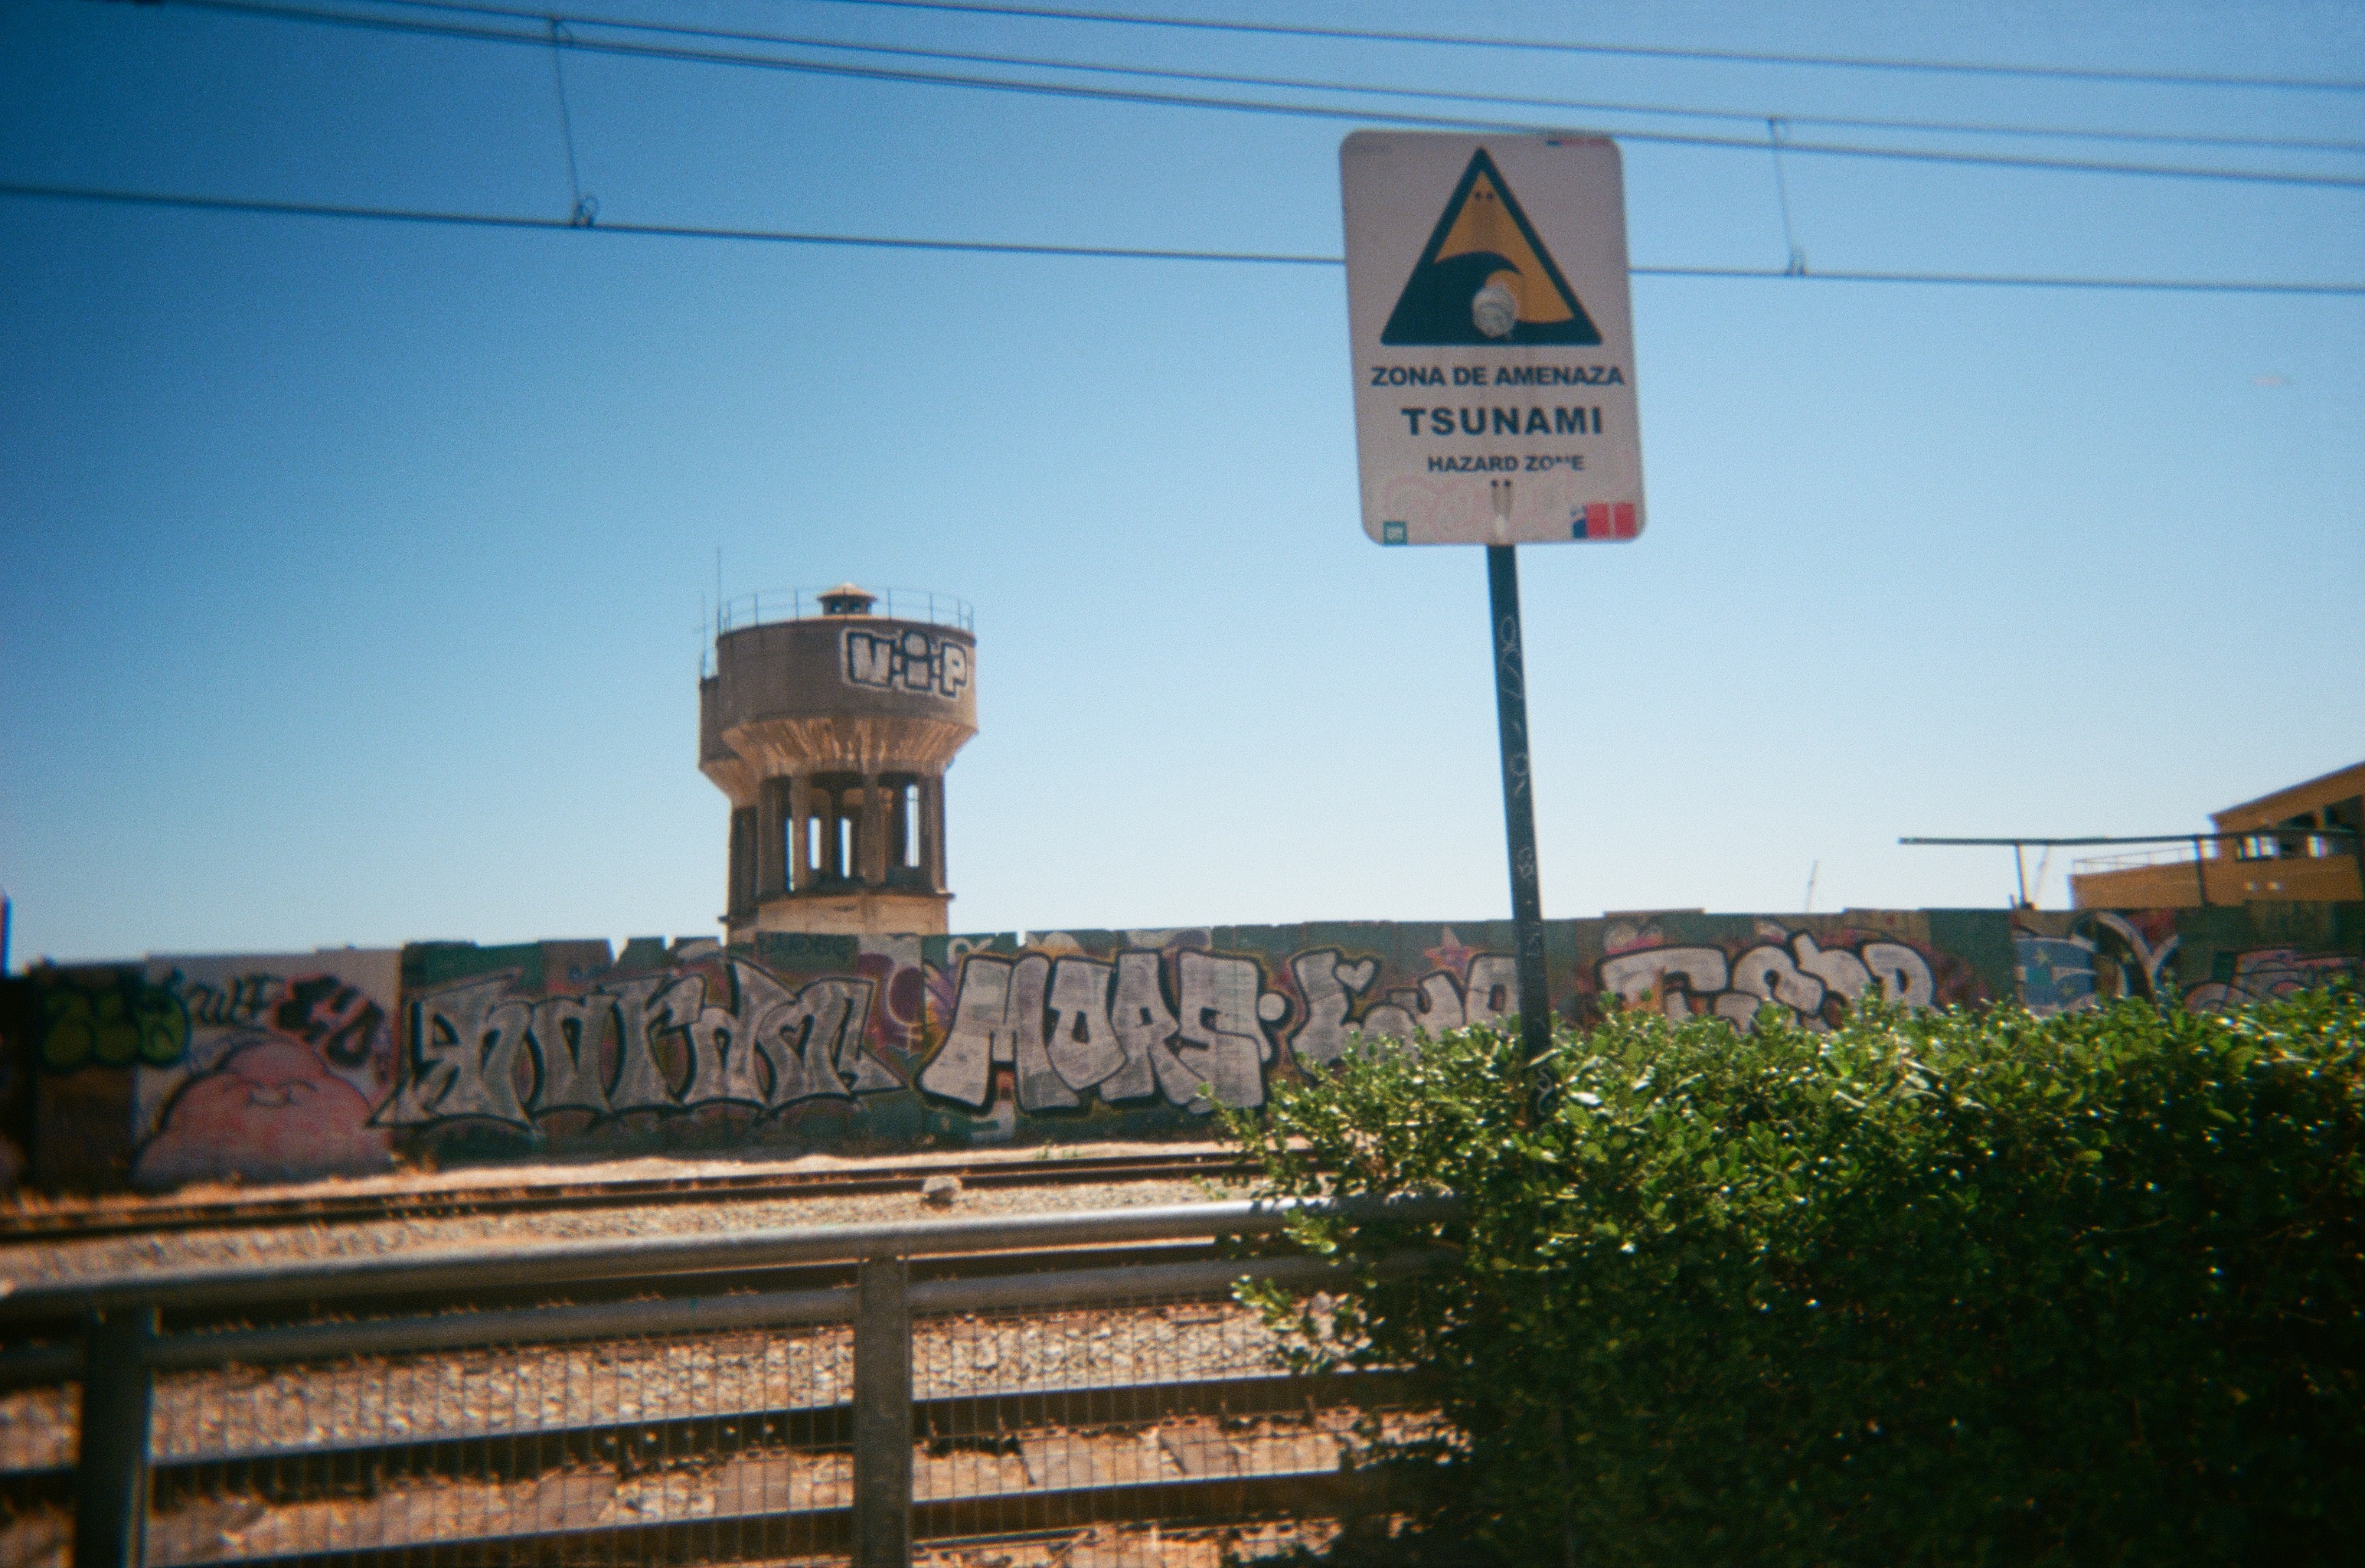 Railroads with wall full of grafiti, sign says tsunami area